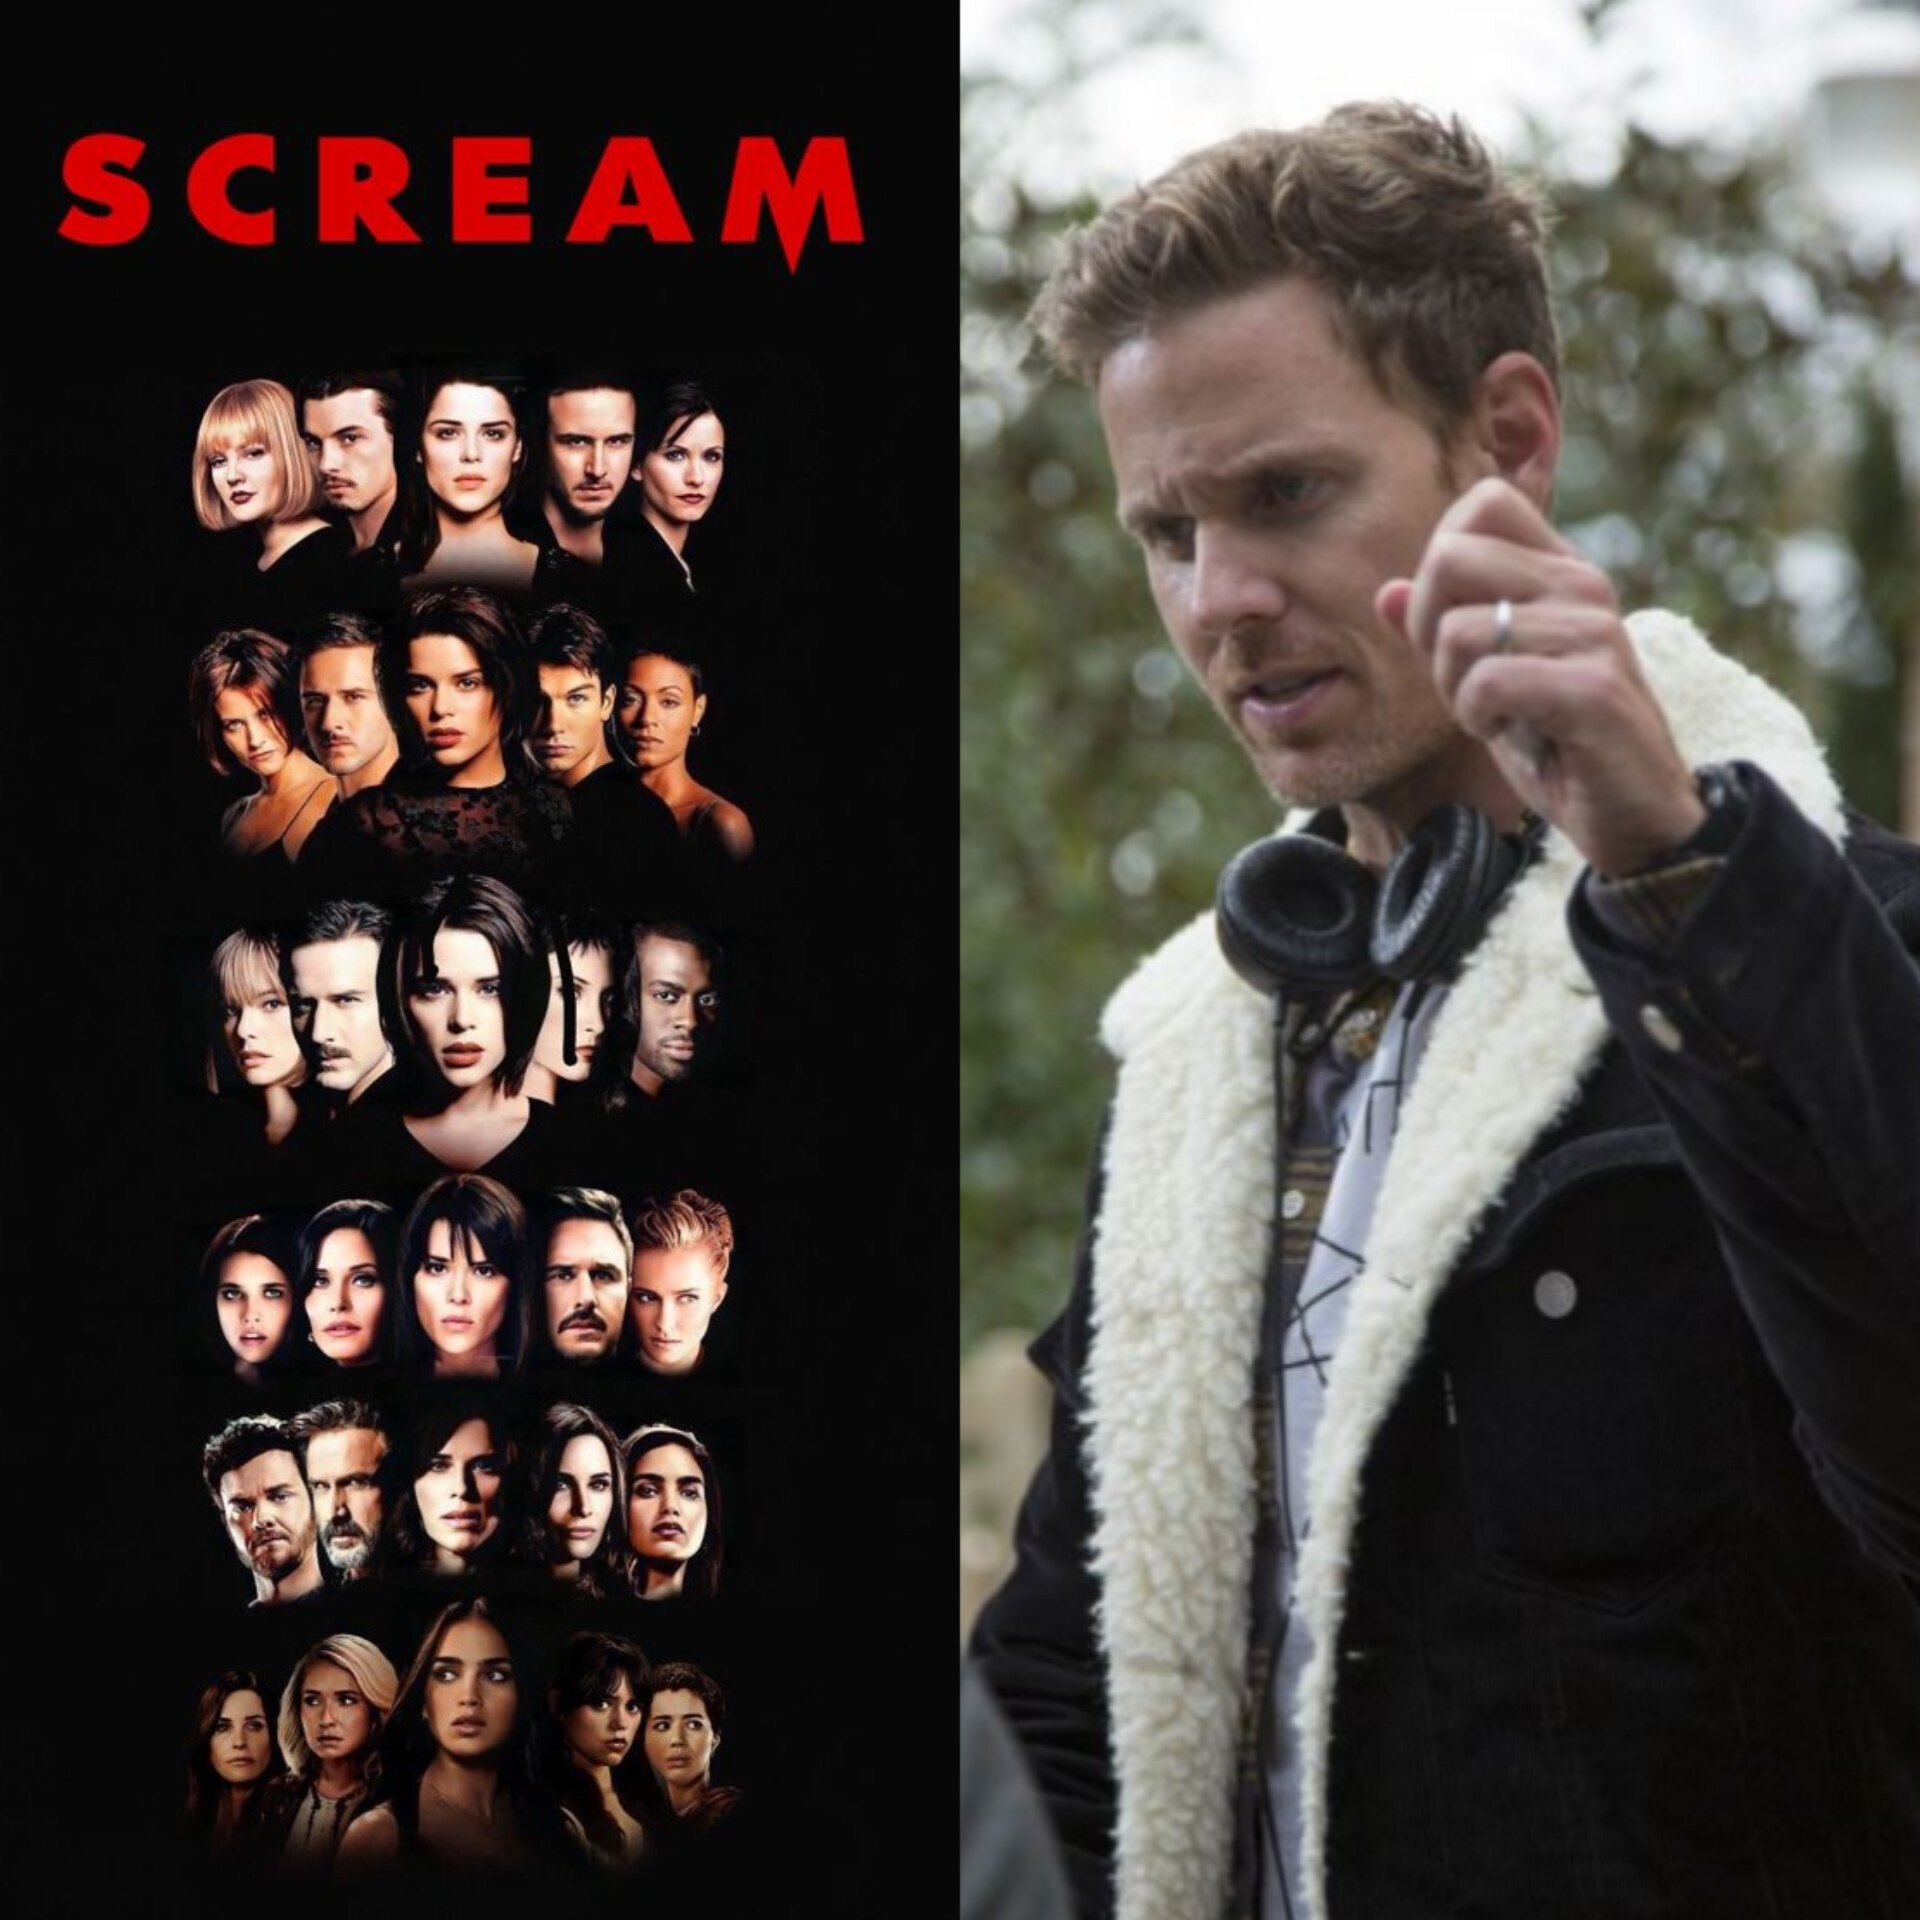 Christopher Landon to direct Scream 7